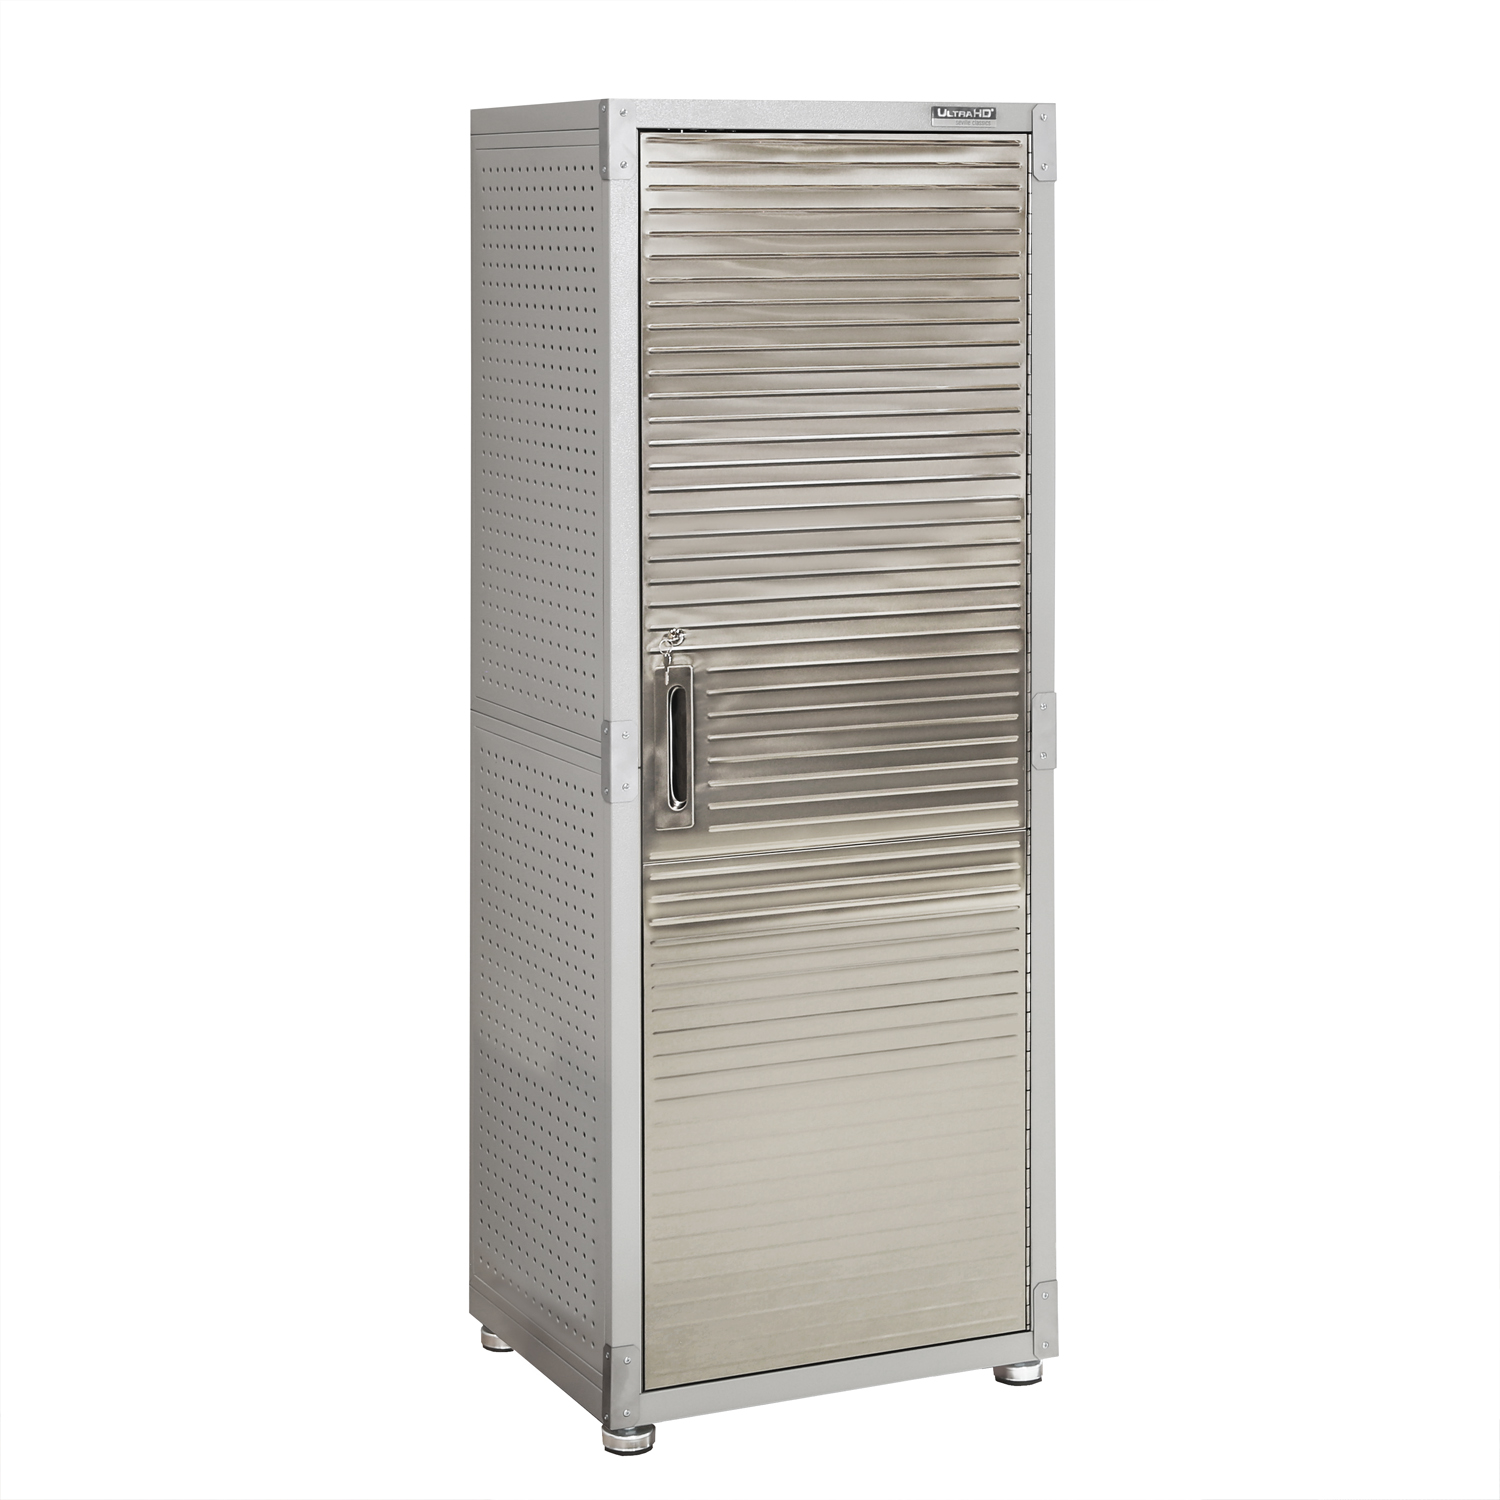 Seville Classics UltraHD Steel Storage Locker Cabinet, 24" W x 18" D x 66" H, Granite Gray - image 6 of 11